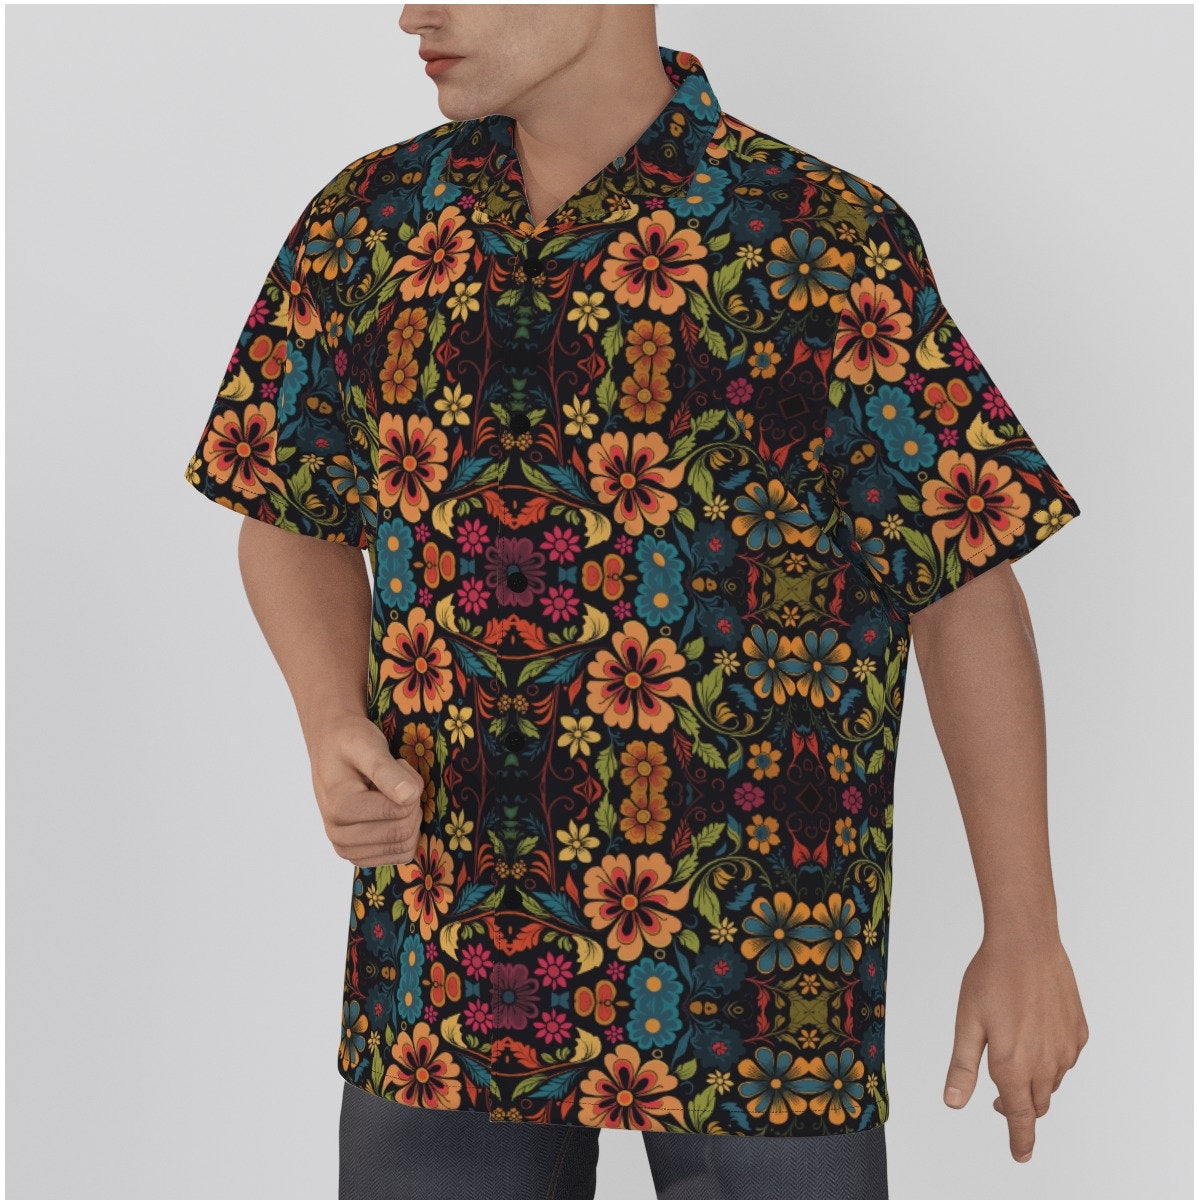 Hawaiian Shirt Men, Floral Shirt Men, Retro Top, Retro Shirt Men,60s 70s Style Shirt,Vintage Style Shirt, Hippie Shirt Men,Men&#39;s Button Down